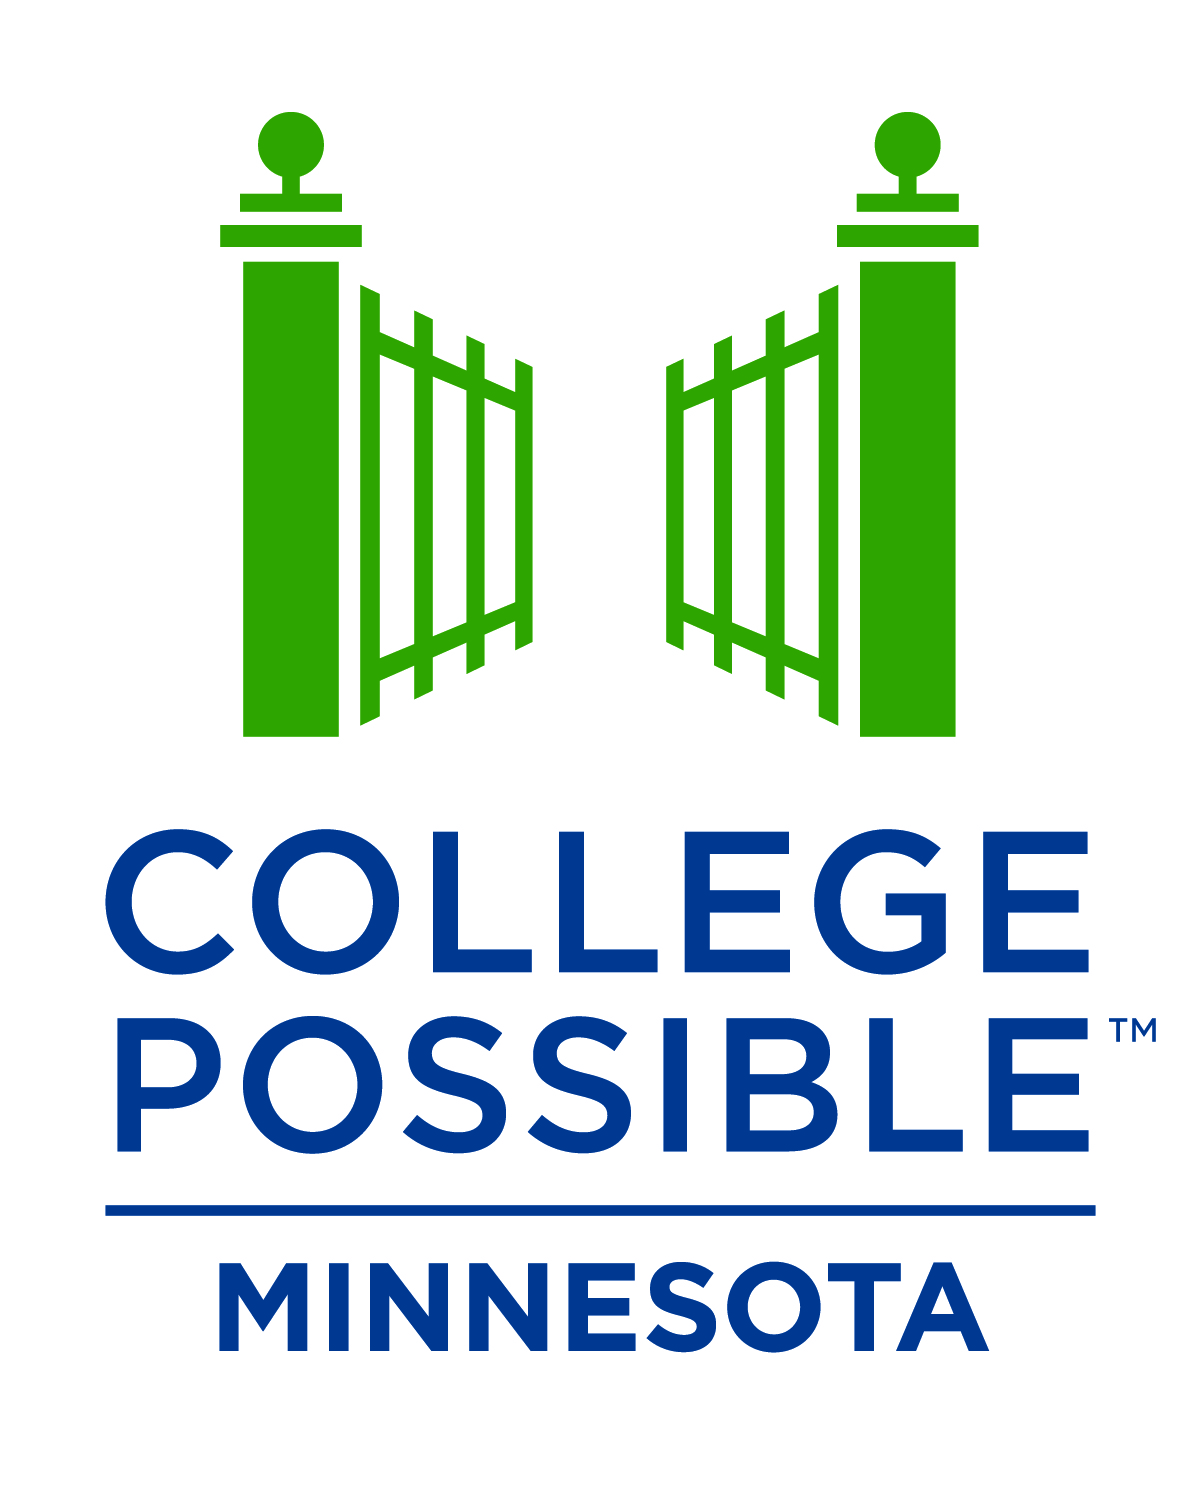 College Possible Minnesota